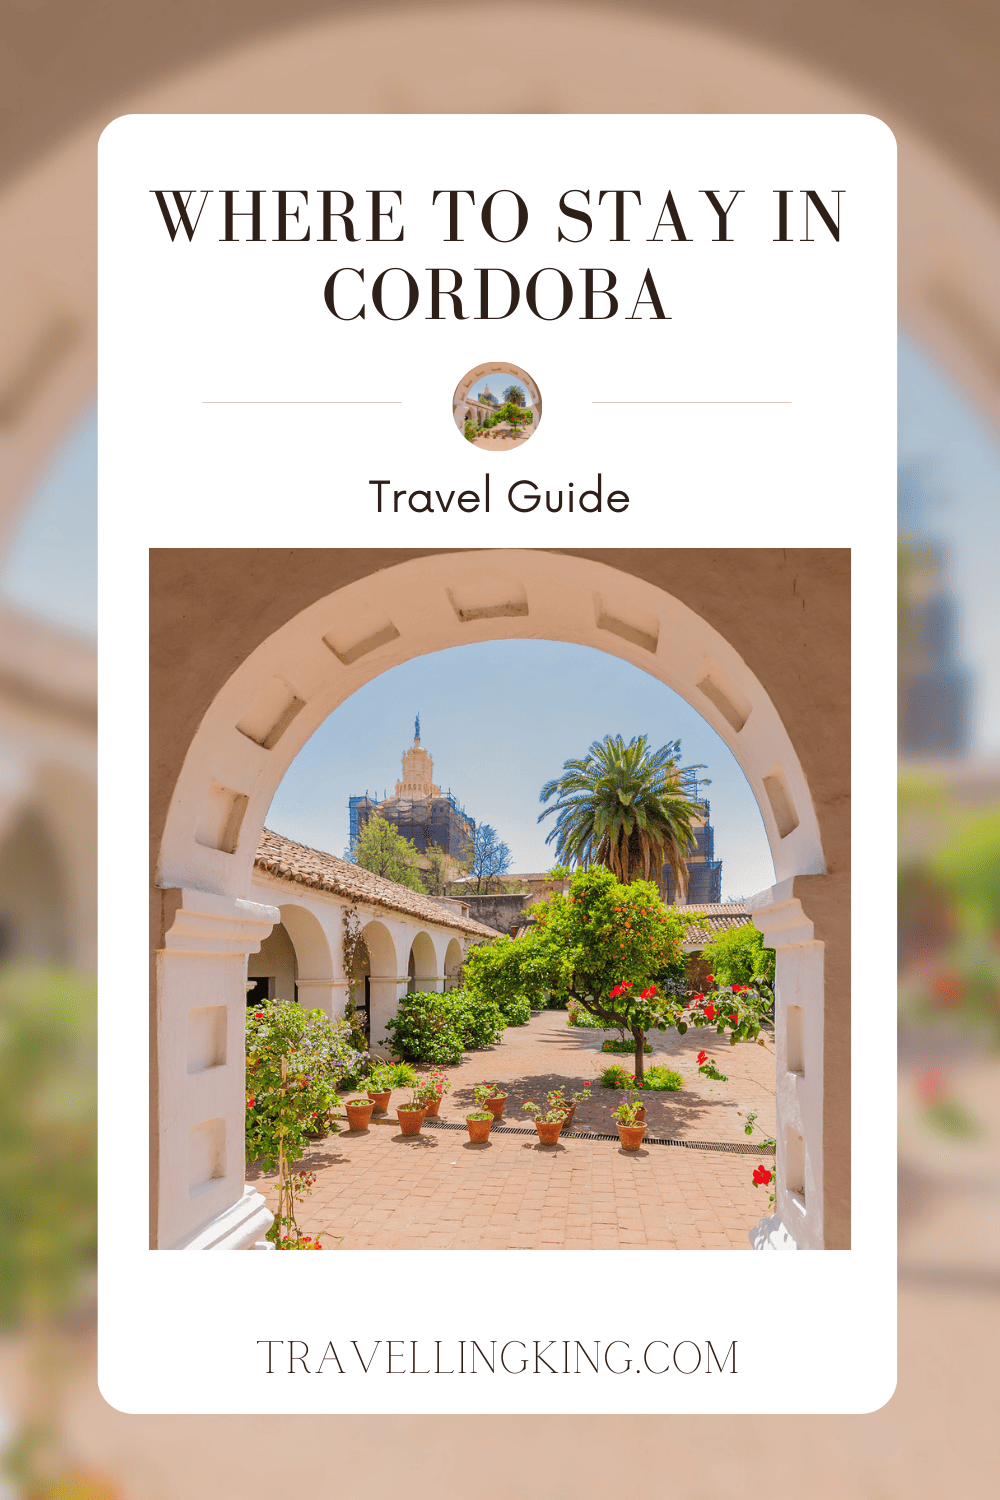 Where to stay in Cordoba